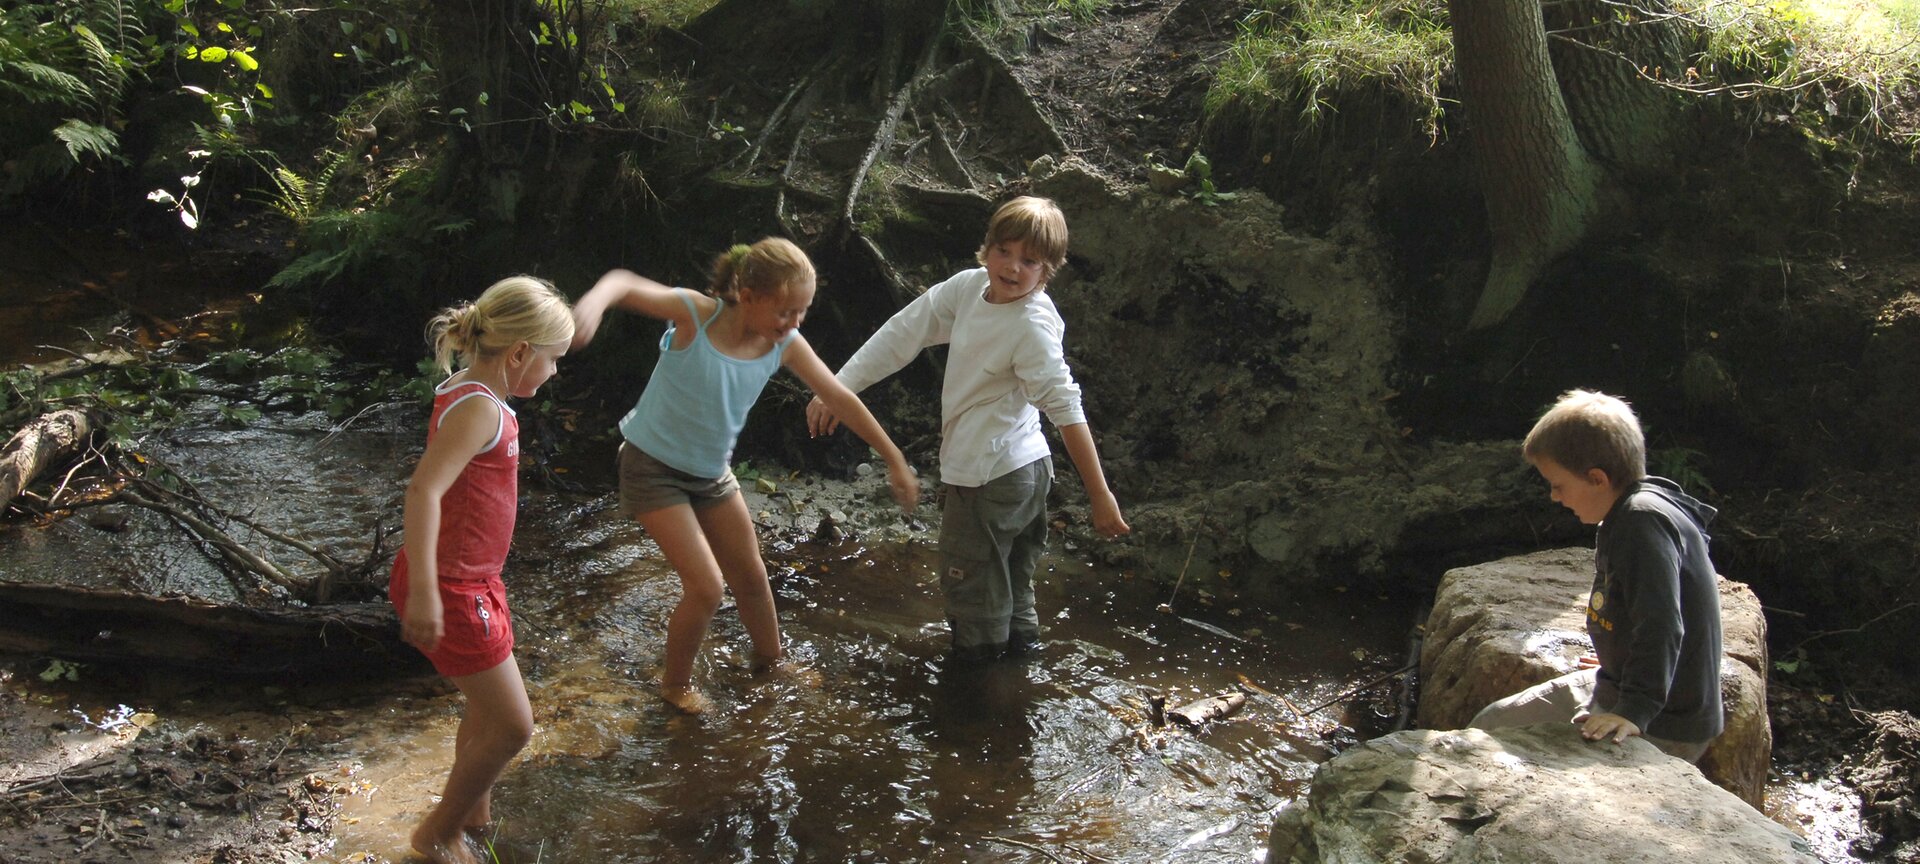 Nationaal Park Bosland: Wandelgebied Resterheide - spelen in het water